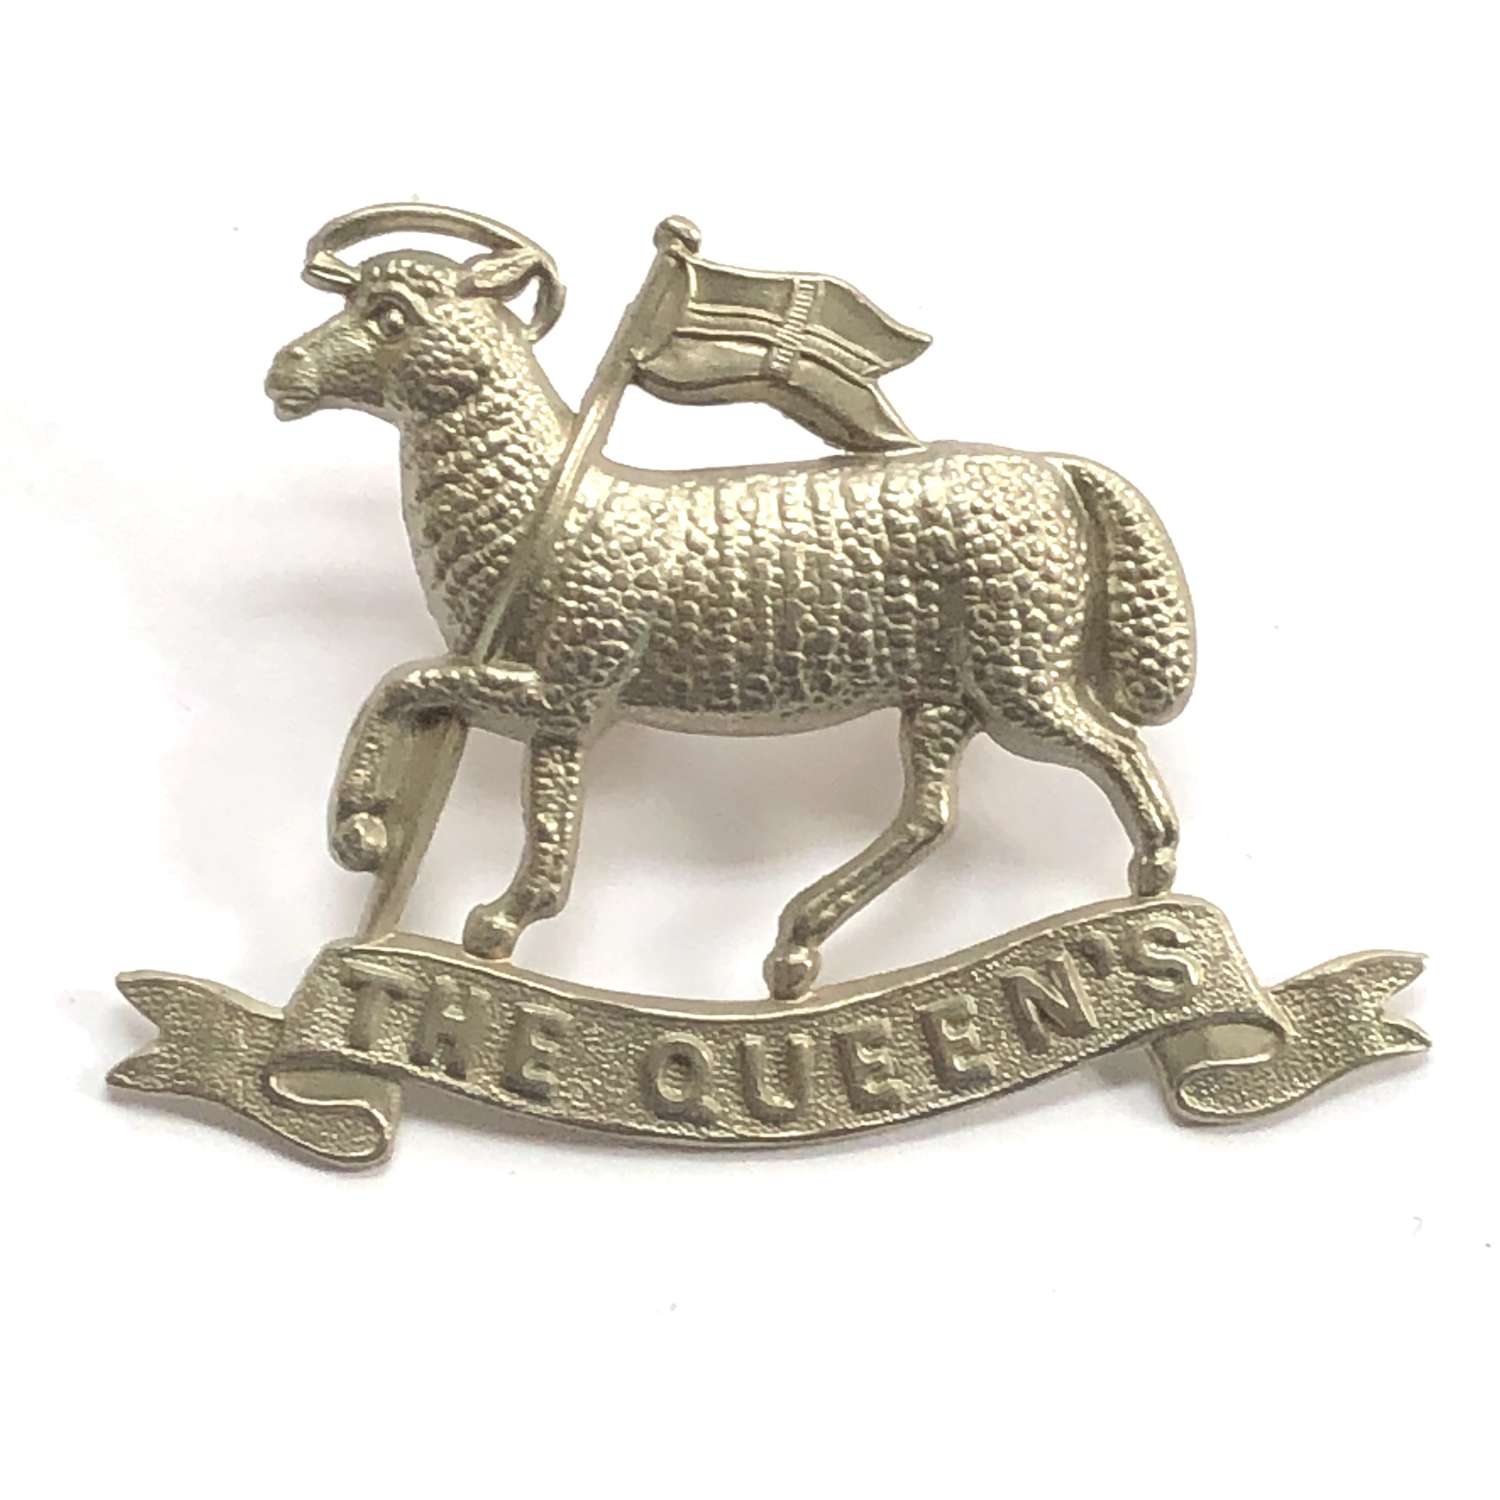 Qween's Royal West Surrey Regiment white metal cap badge c1896-1908